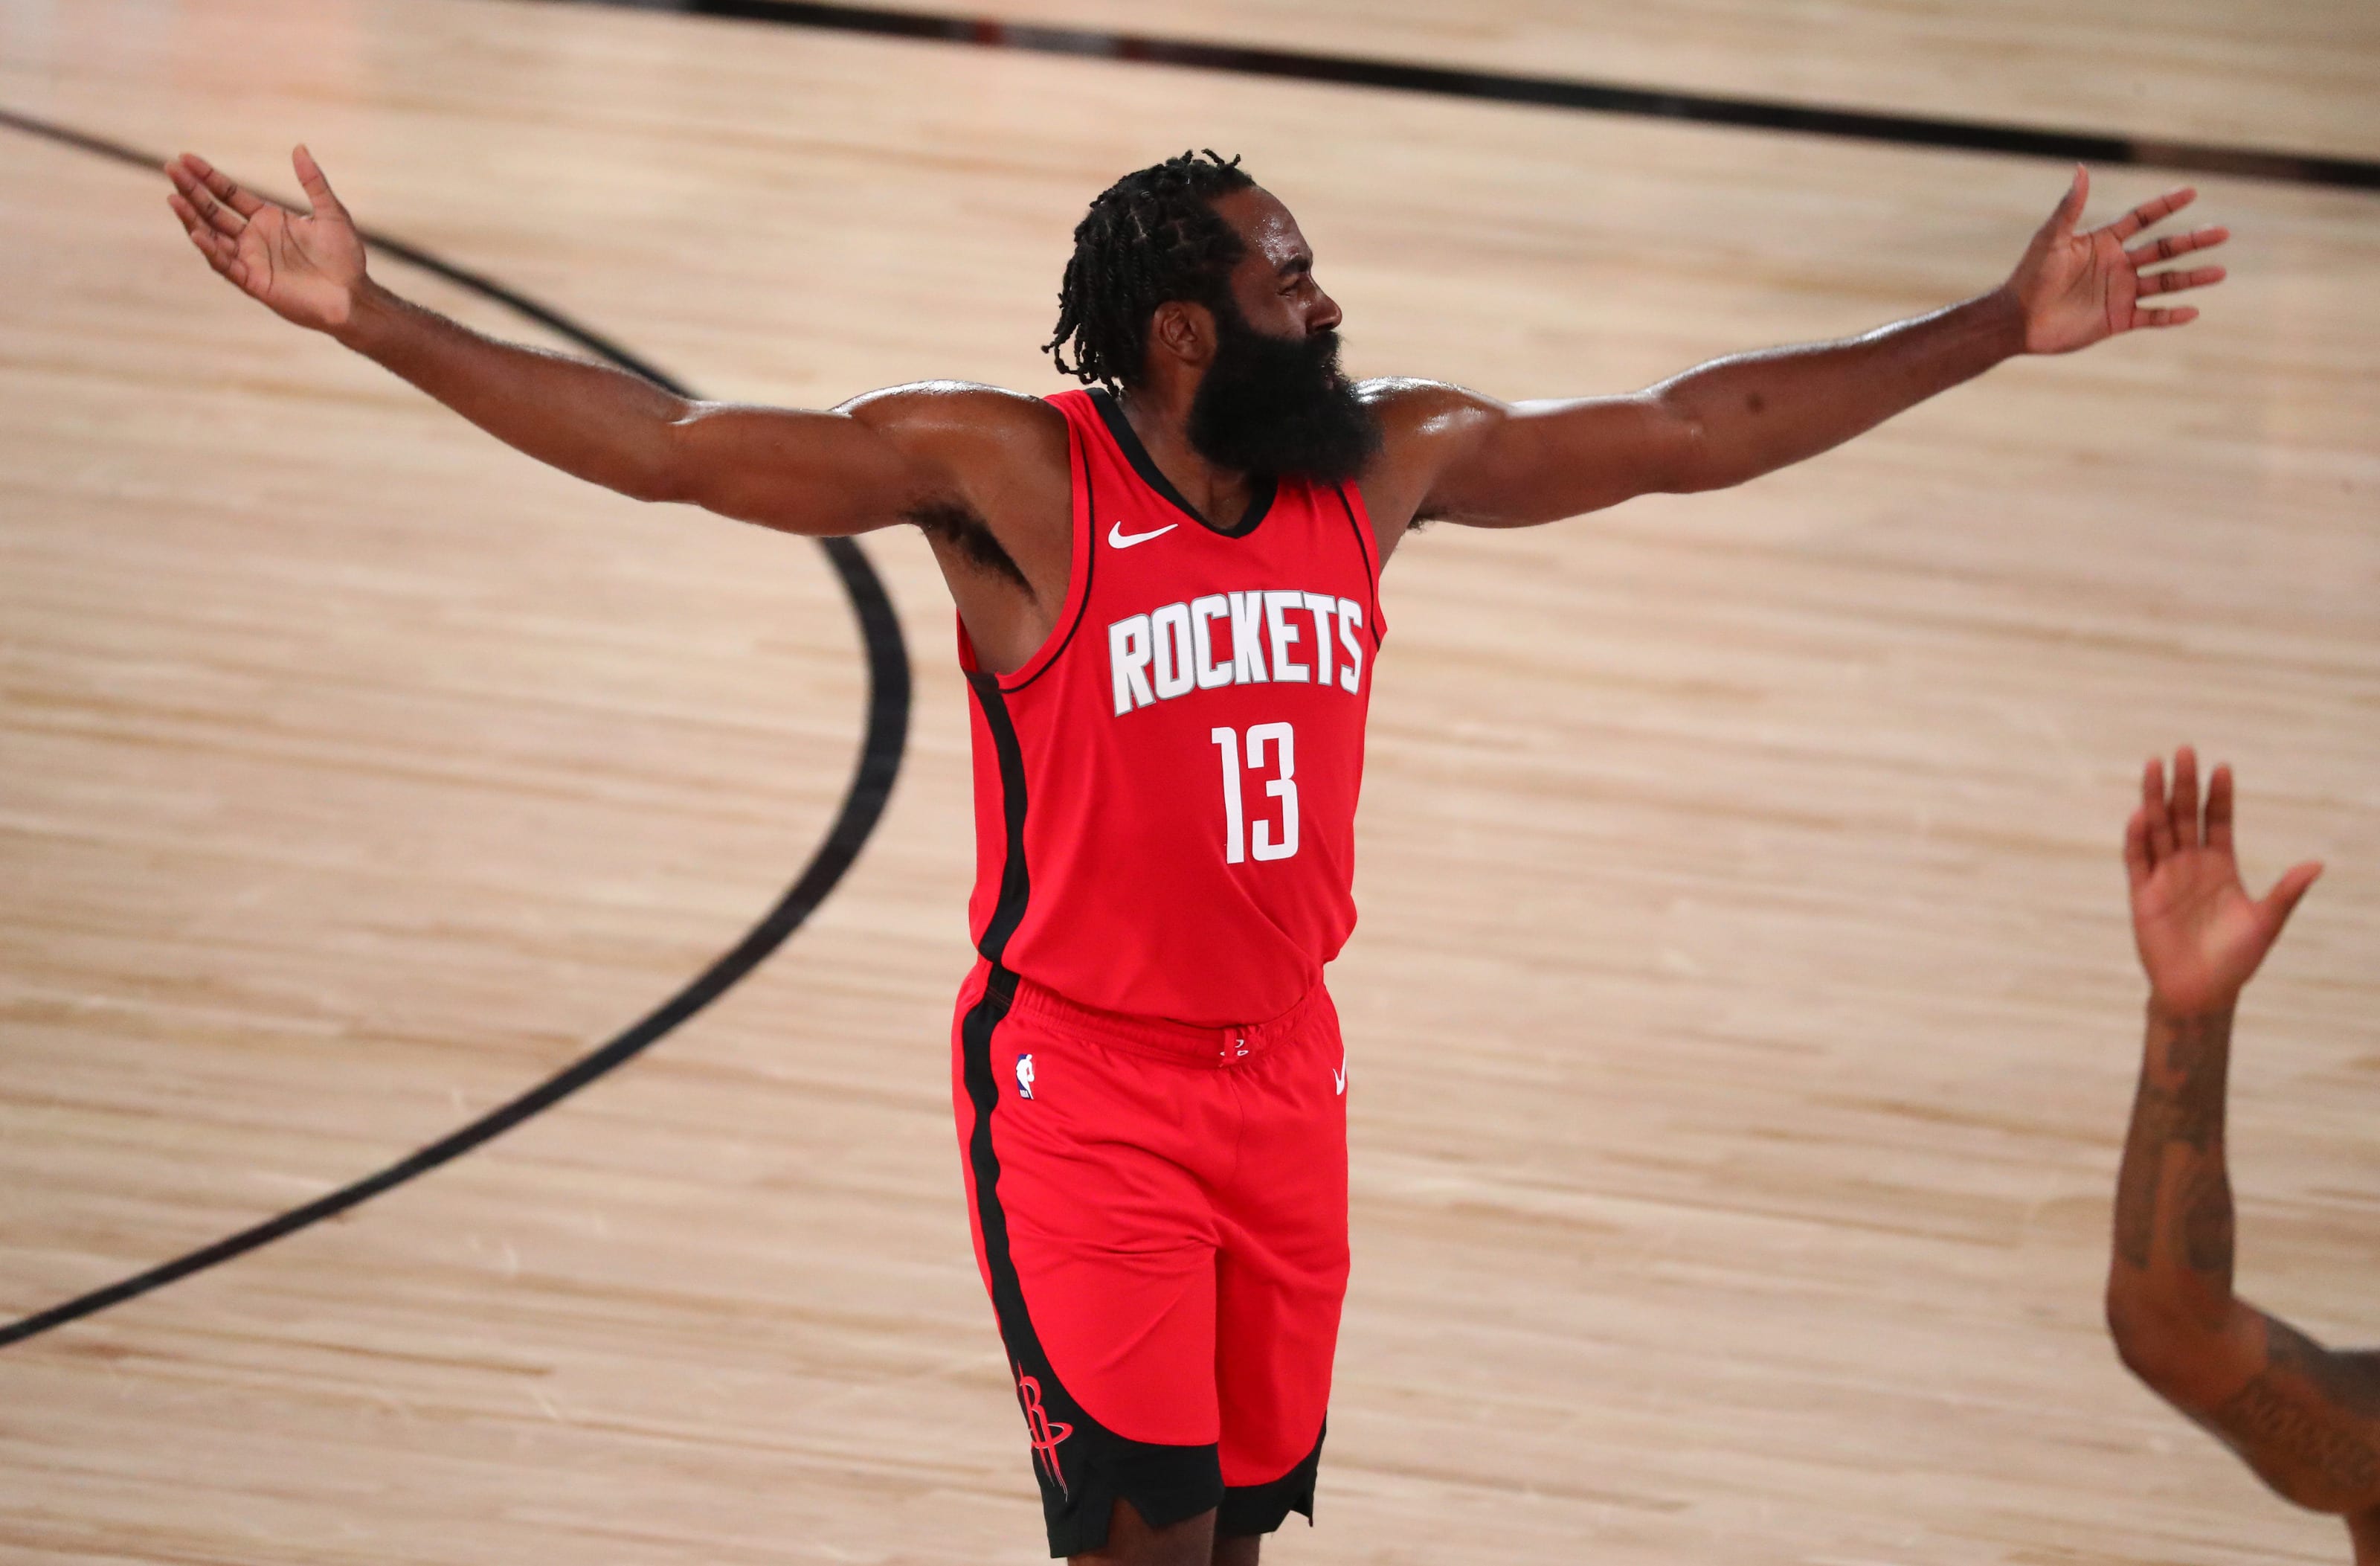 Houston Rockets: 2017-18 player grades for James Harden